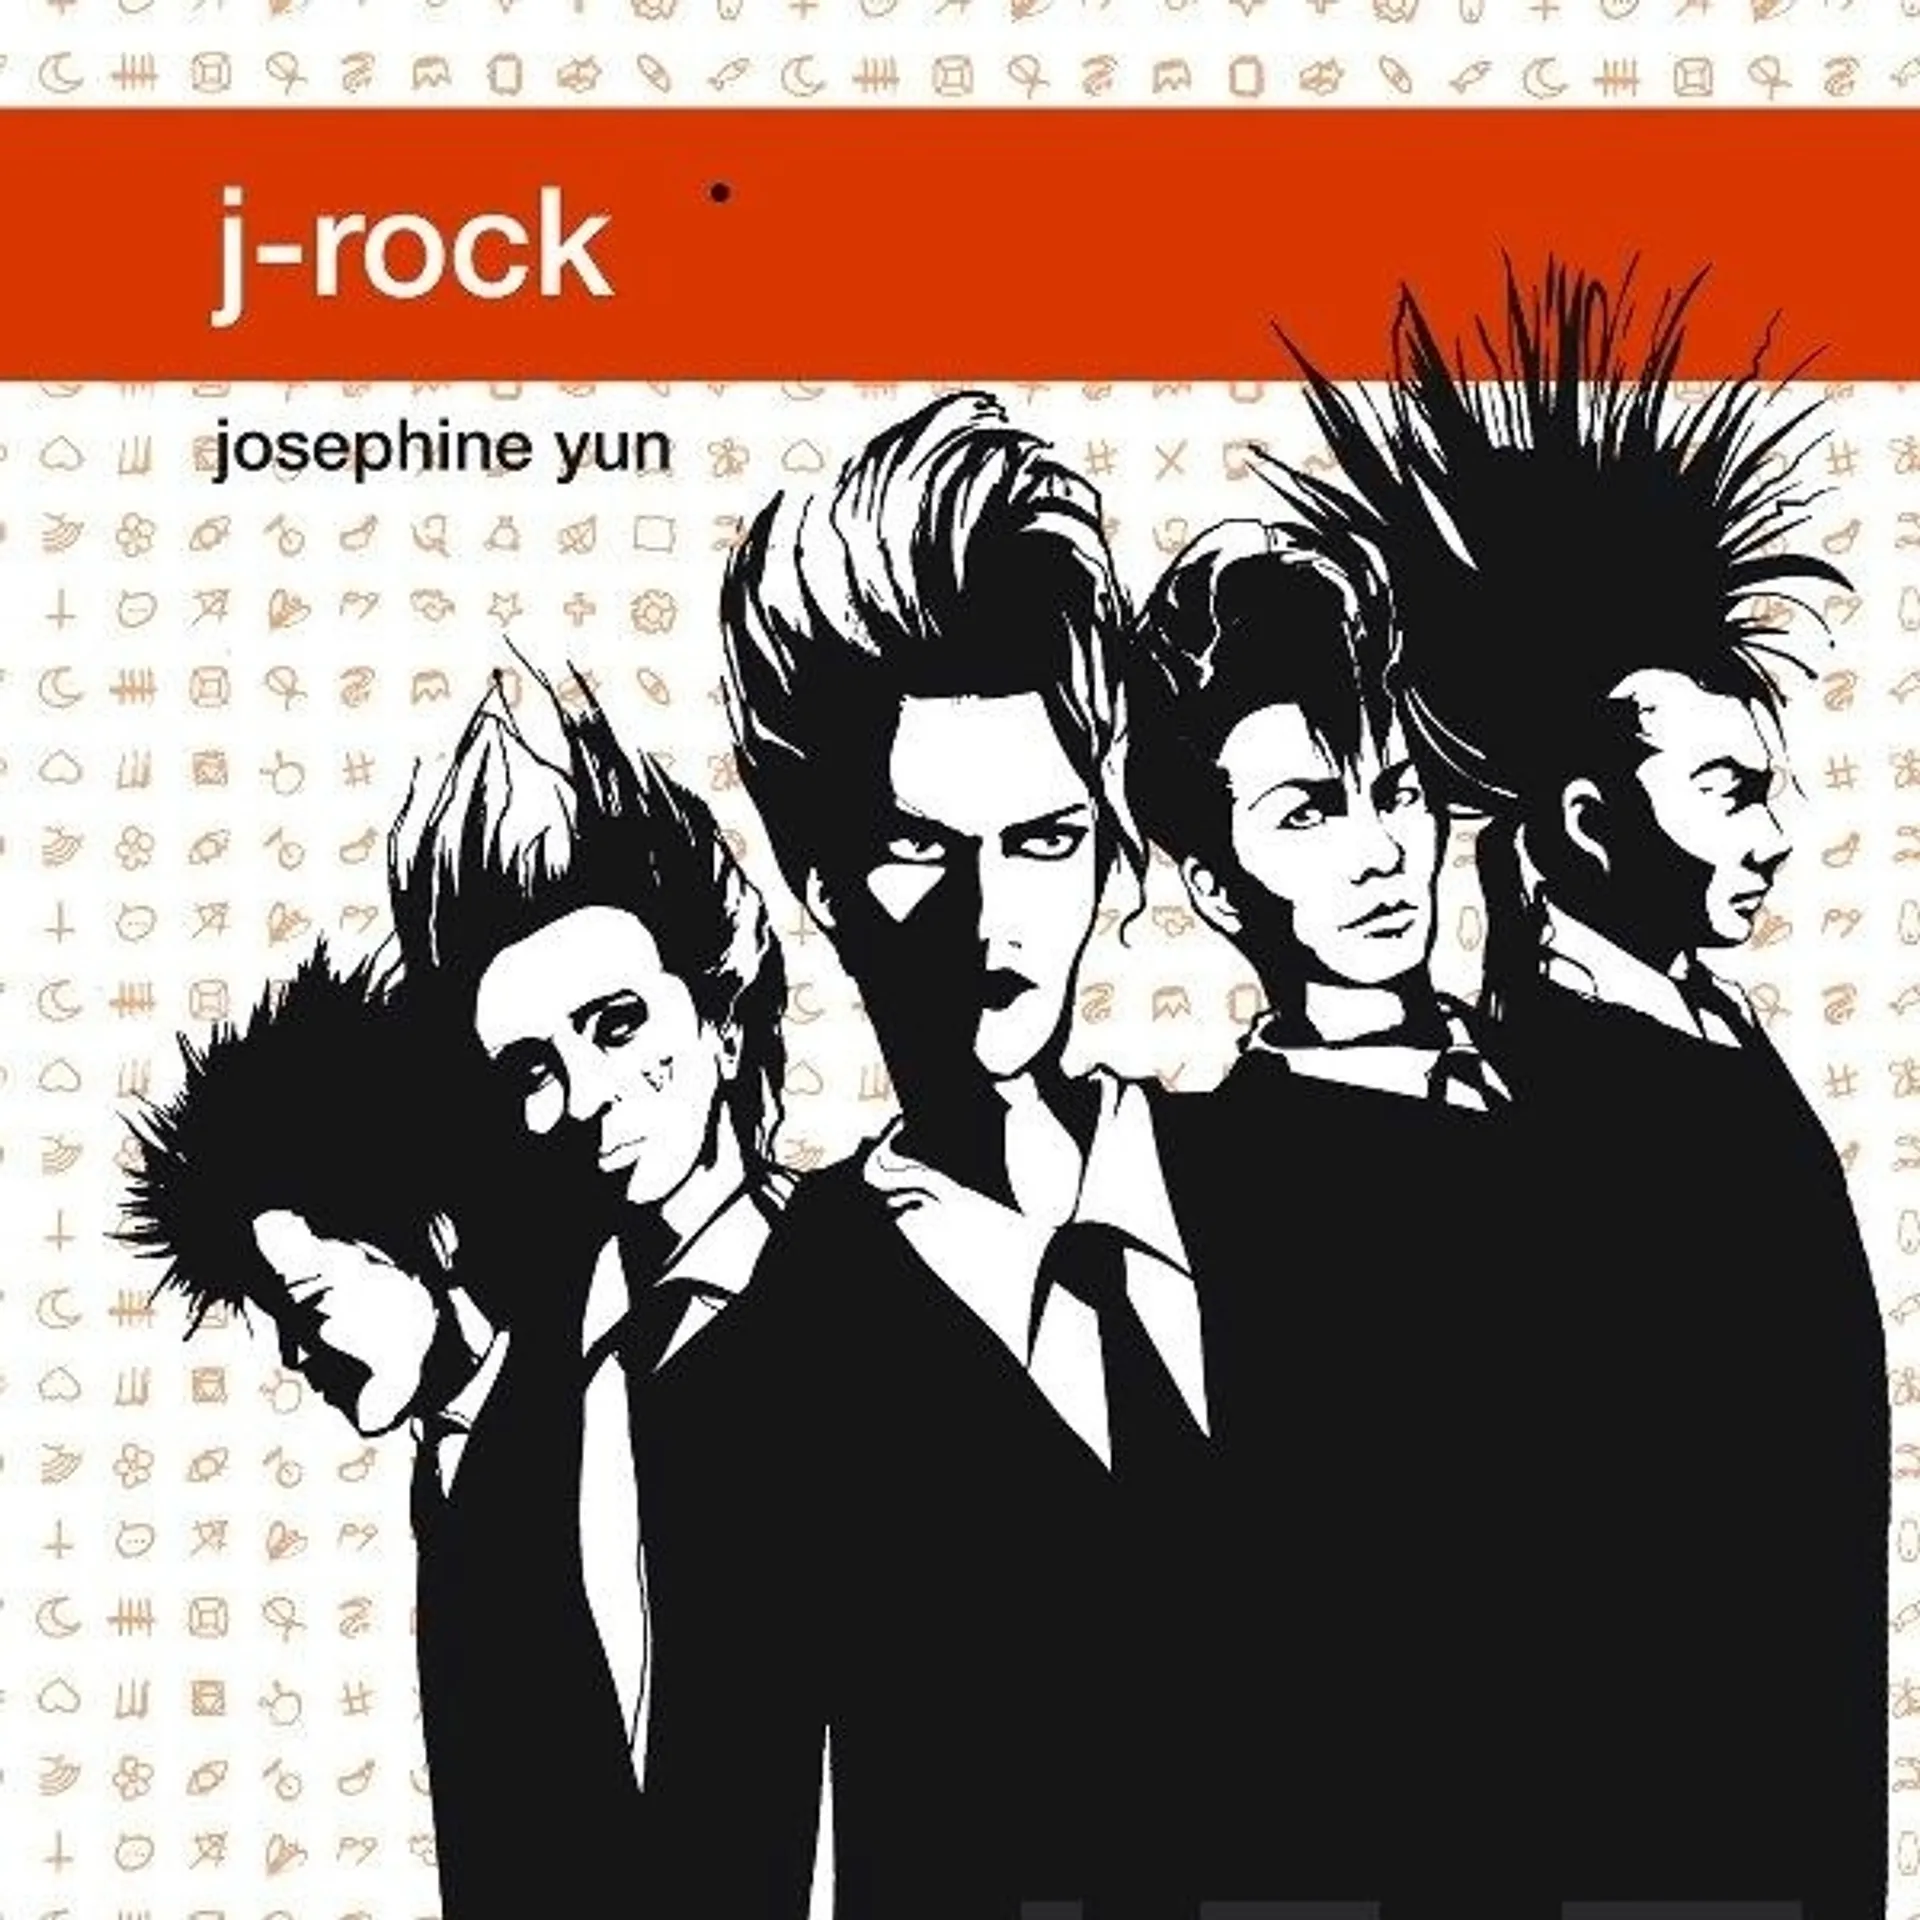 Yun, J-rock